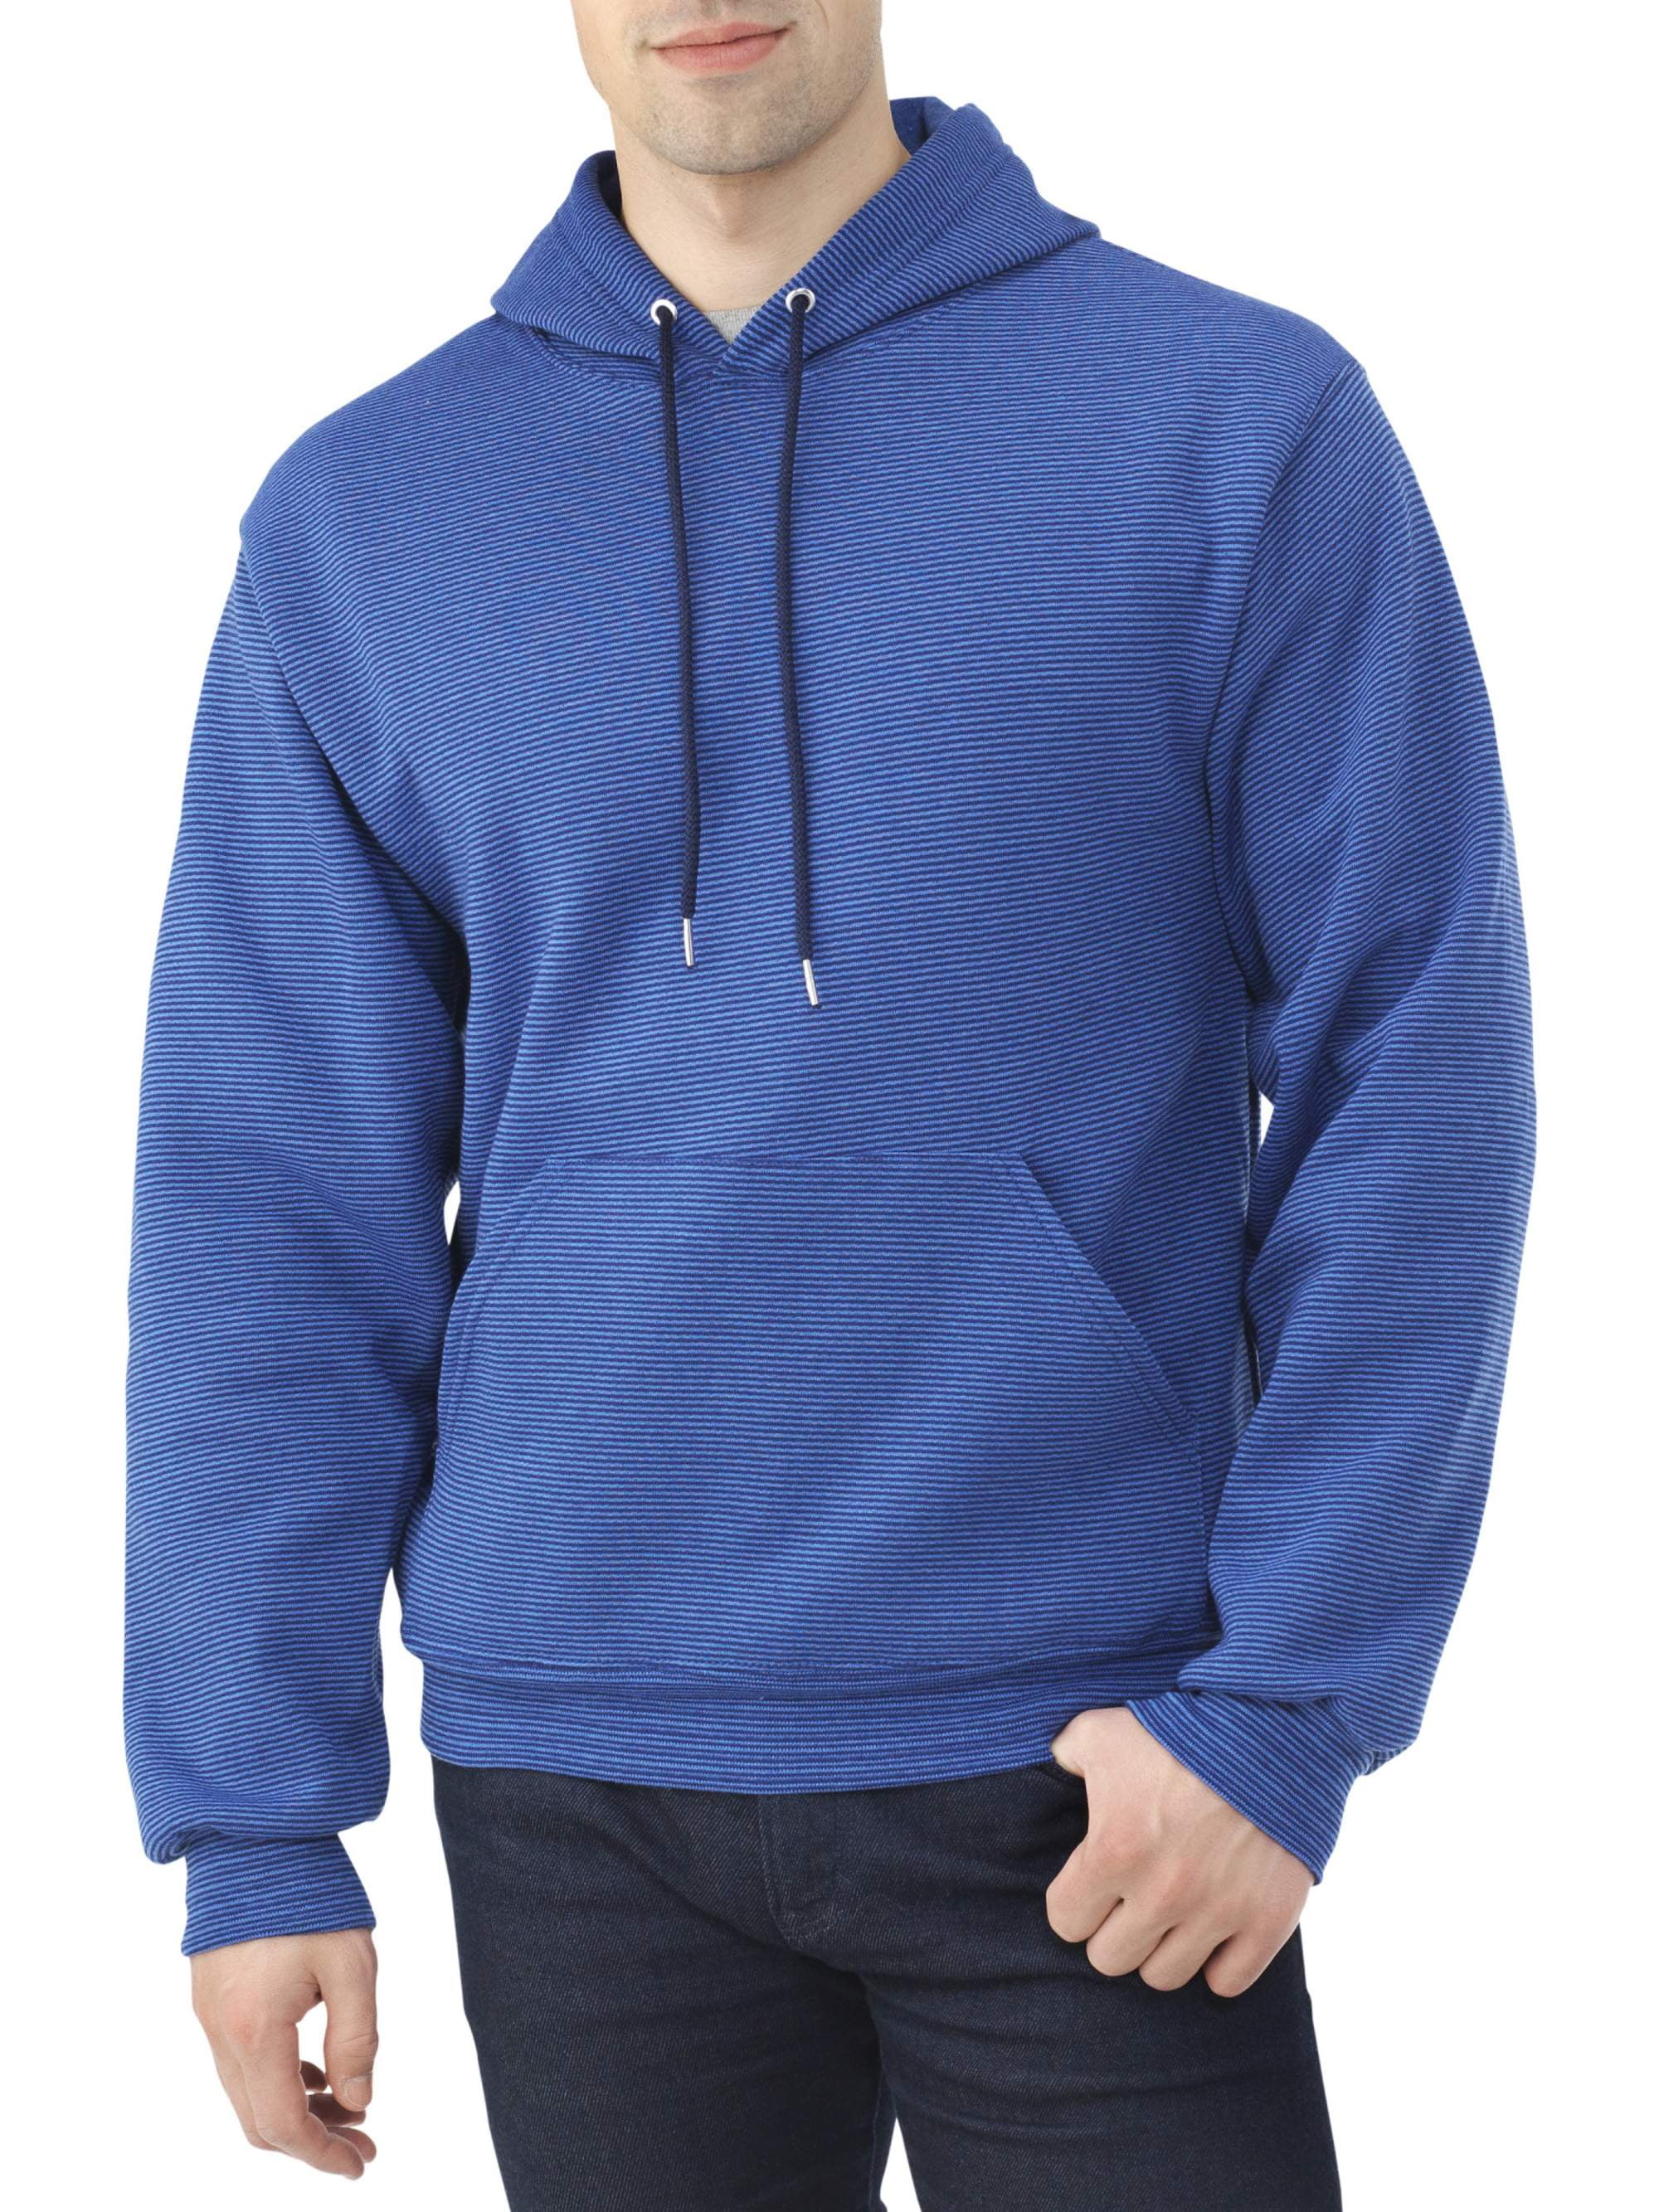 Big Men's Dual Defense Pullover Hooded Sweatshirt - Walmart.com